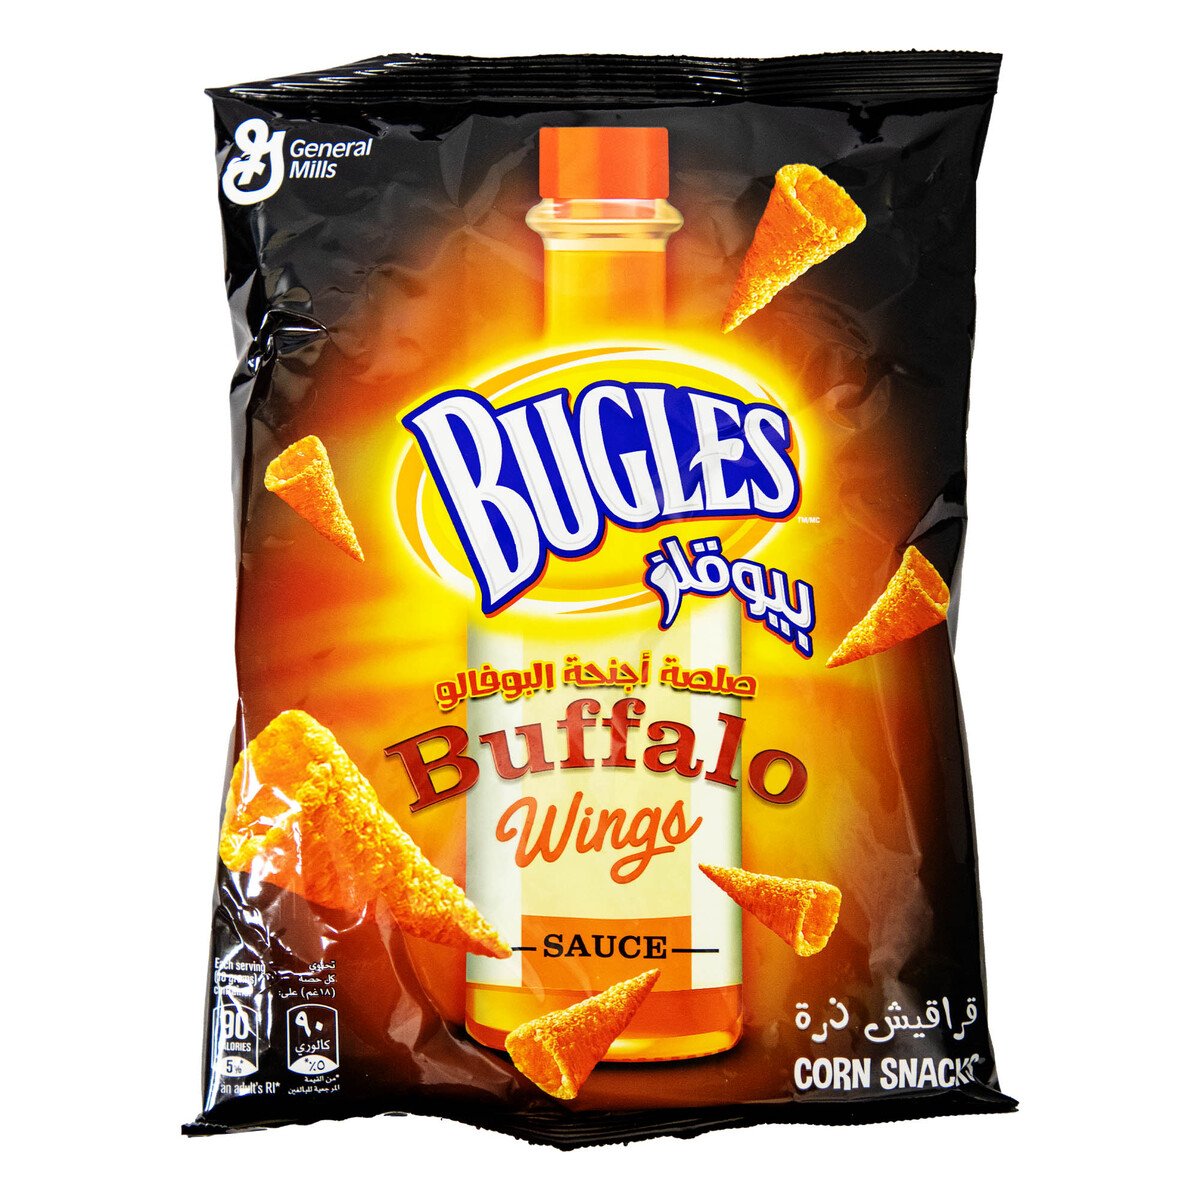 Bugles Buffalo Wings Sauce Corn Snack 125g